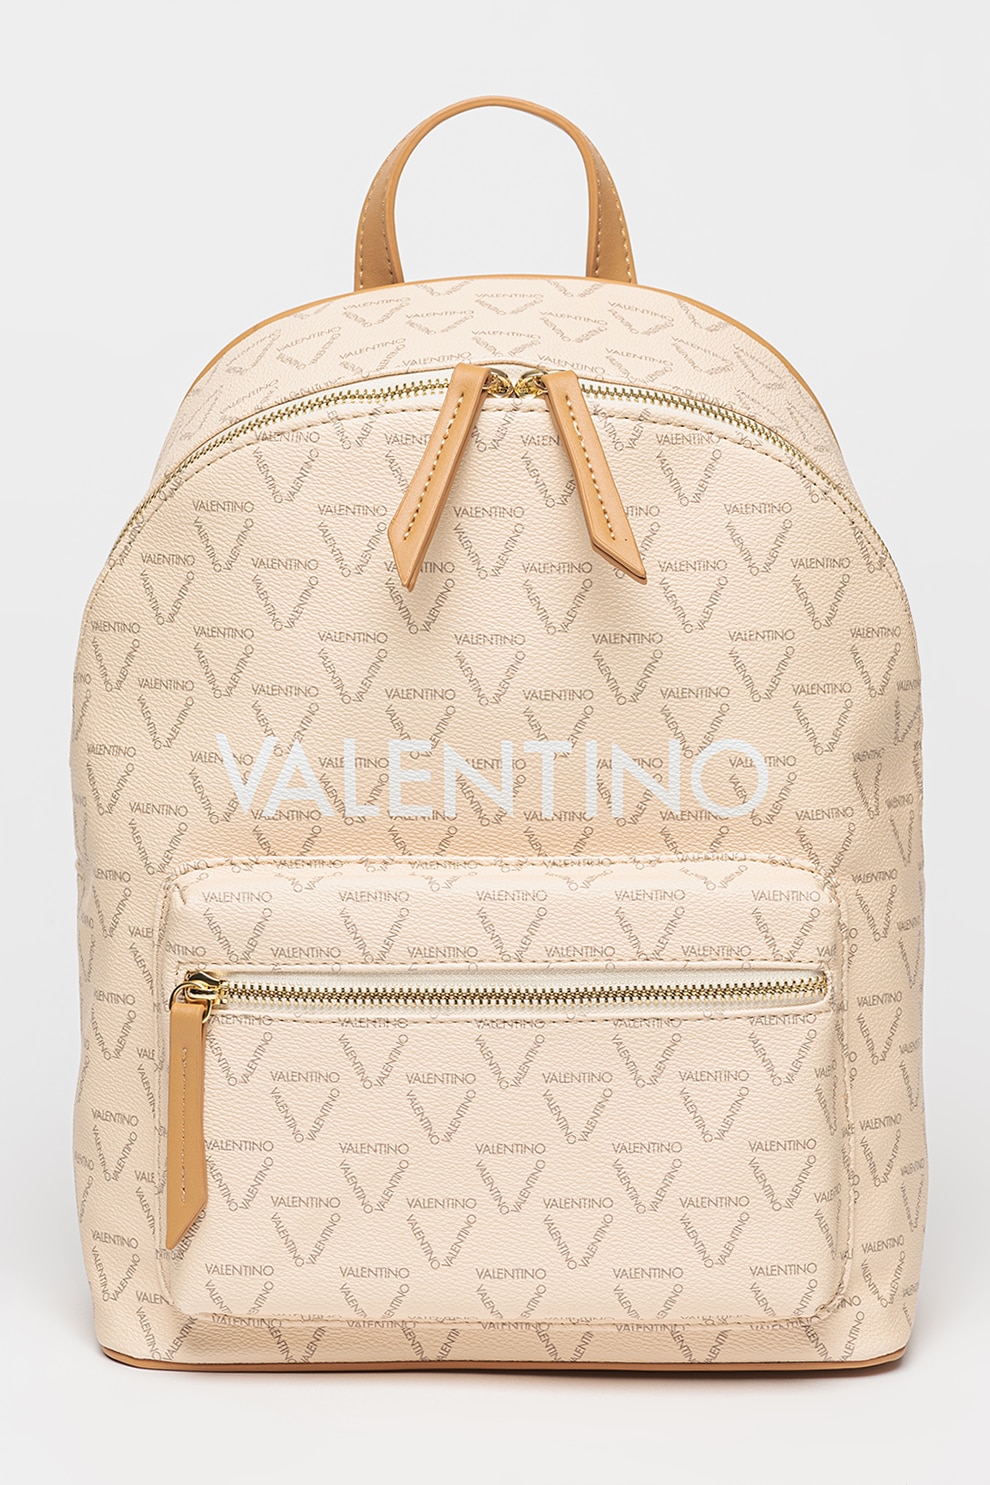 Valentino Bags Pink Liuto Logo Shoulder Bag – Retro Designer Wear